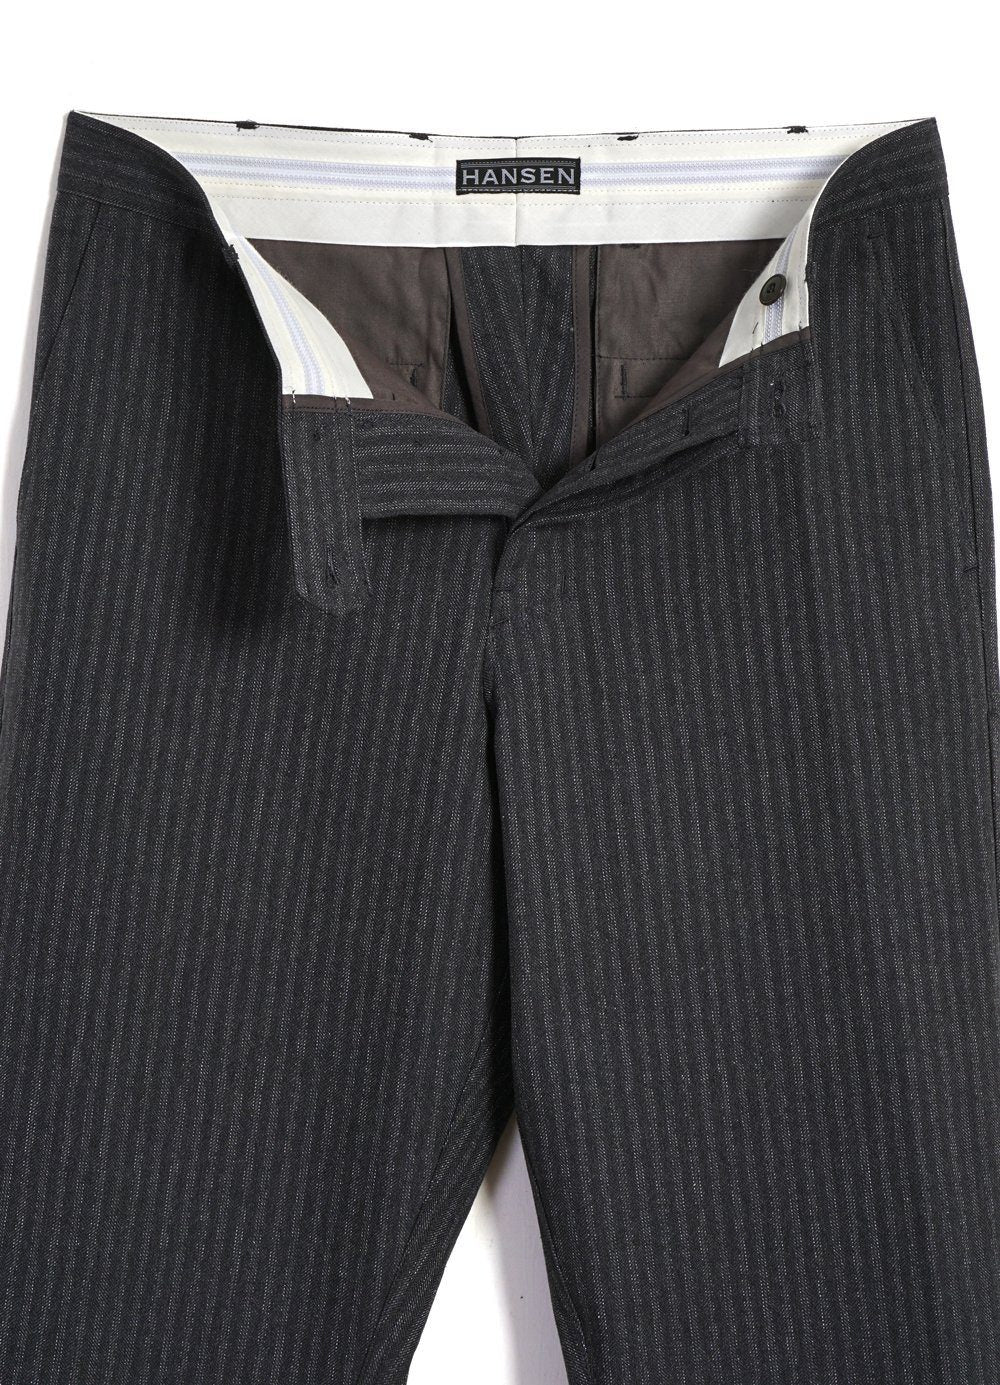 HANSEN GARMENTS - KIAN | Cinch Back Wide Trousers | Grey Pin - HANSEN Garments